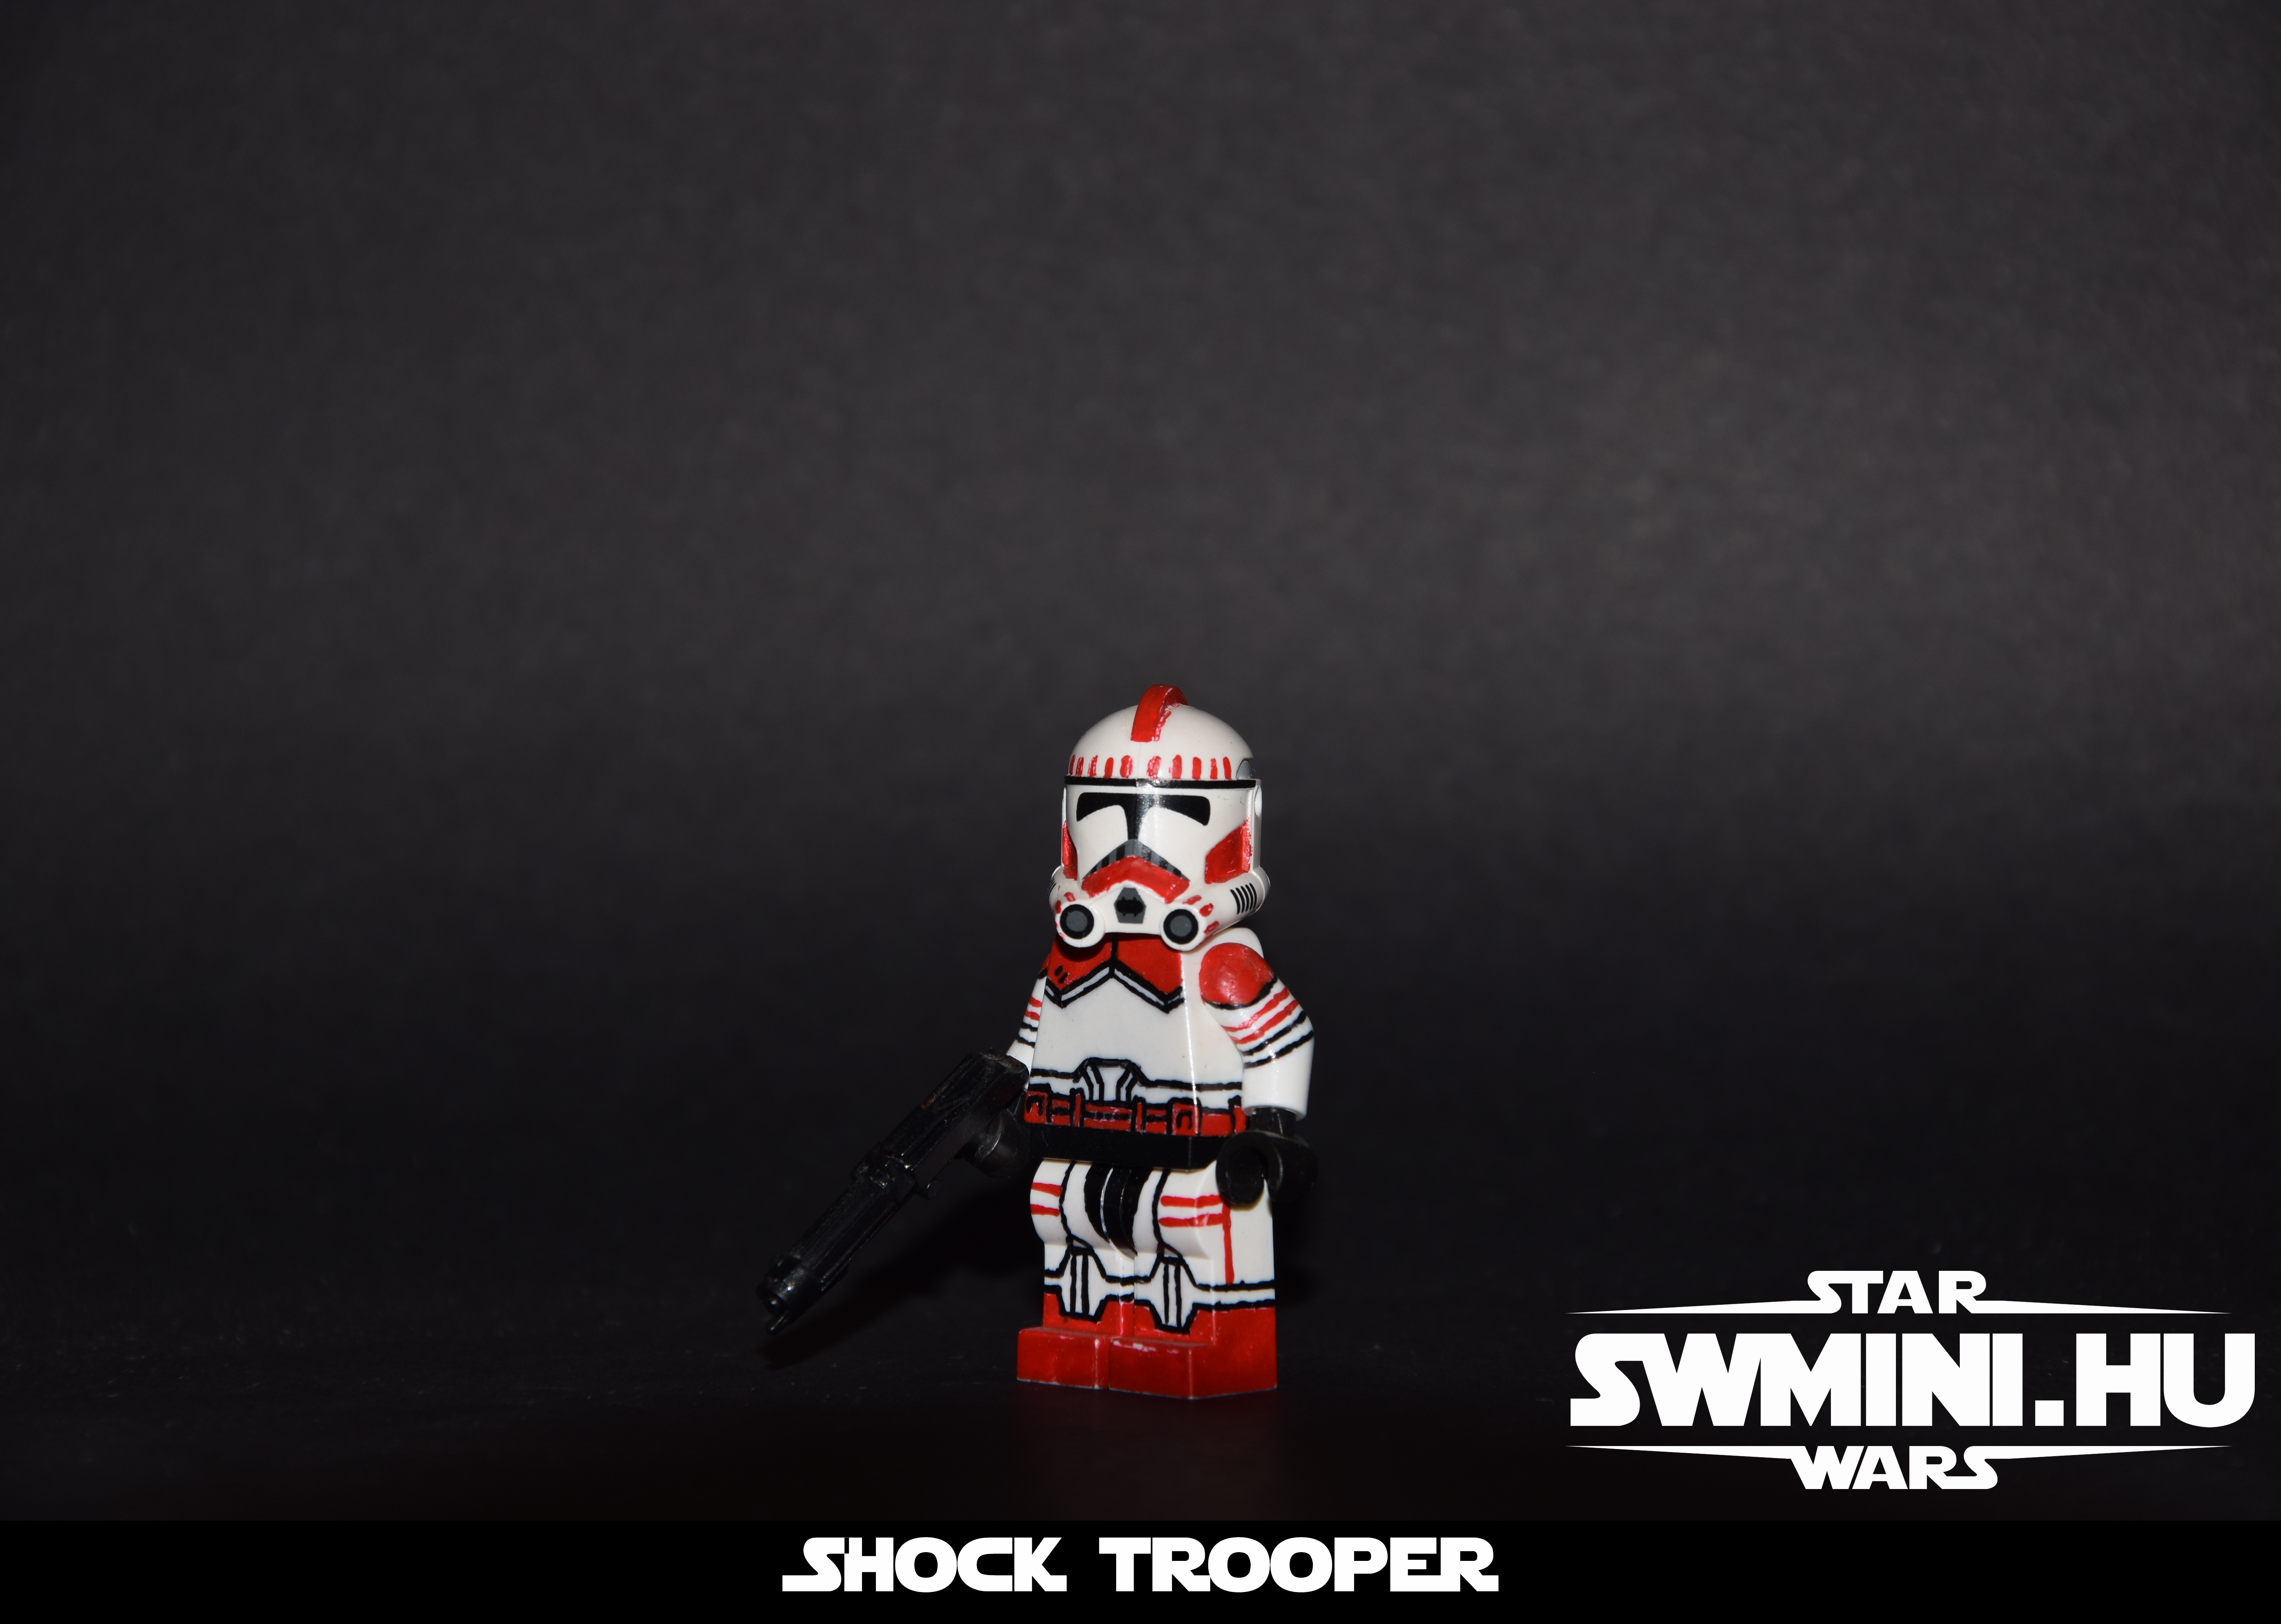 Shock trooper